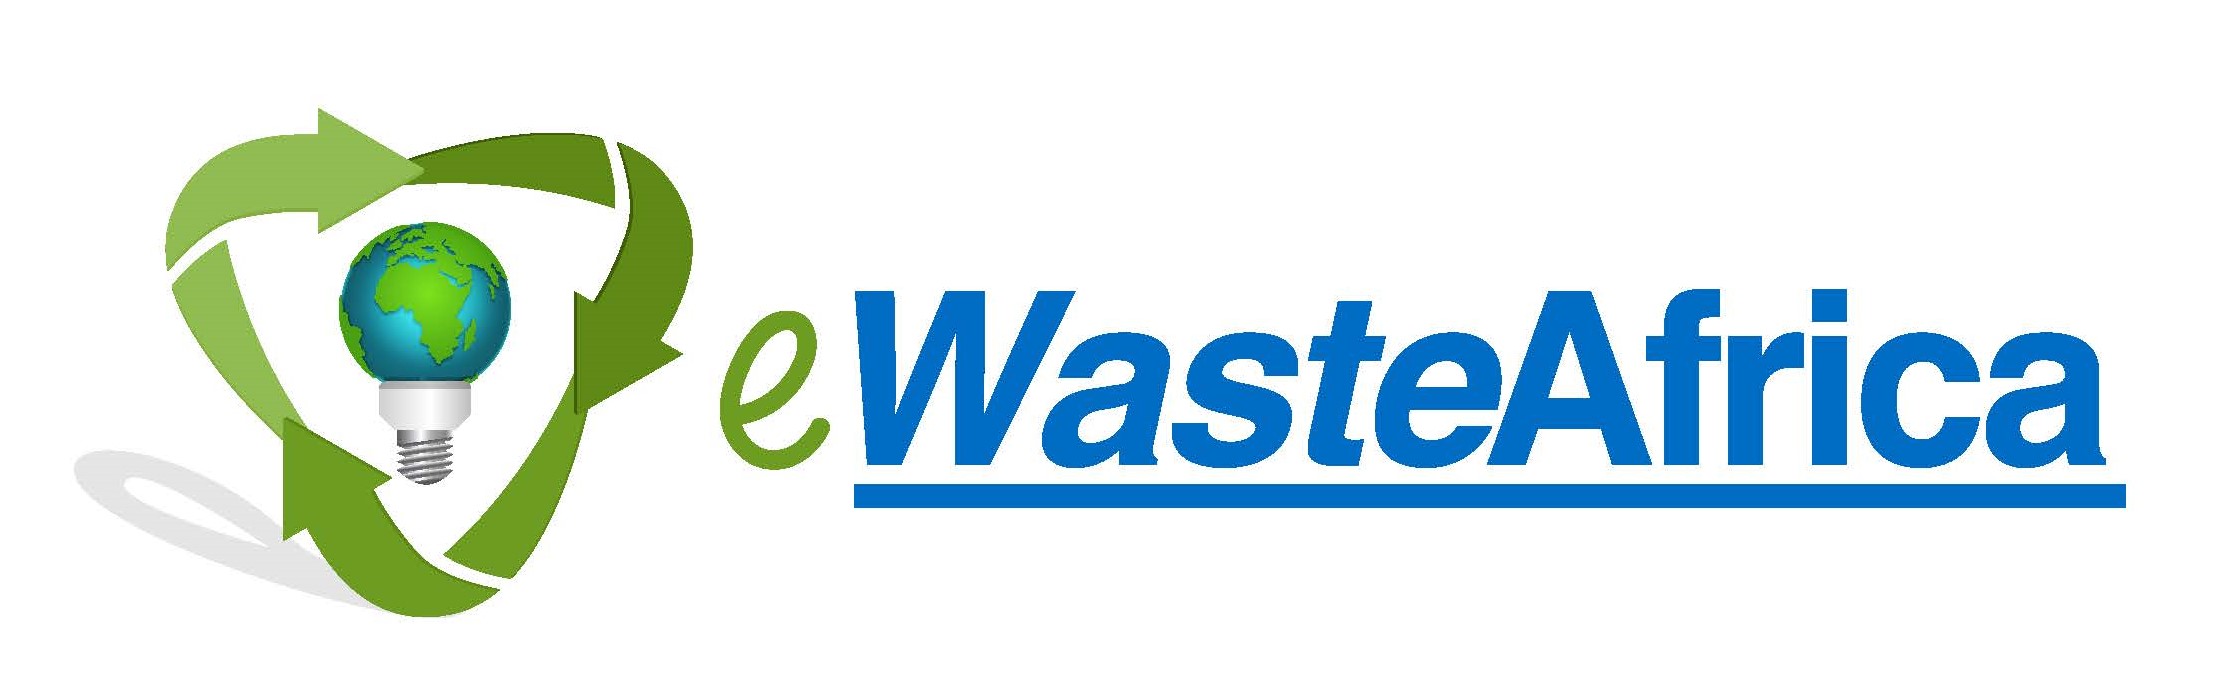 Ewaste-Logo-New-copy.jpg